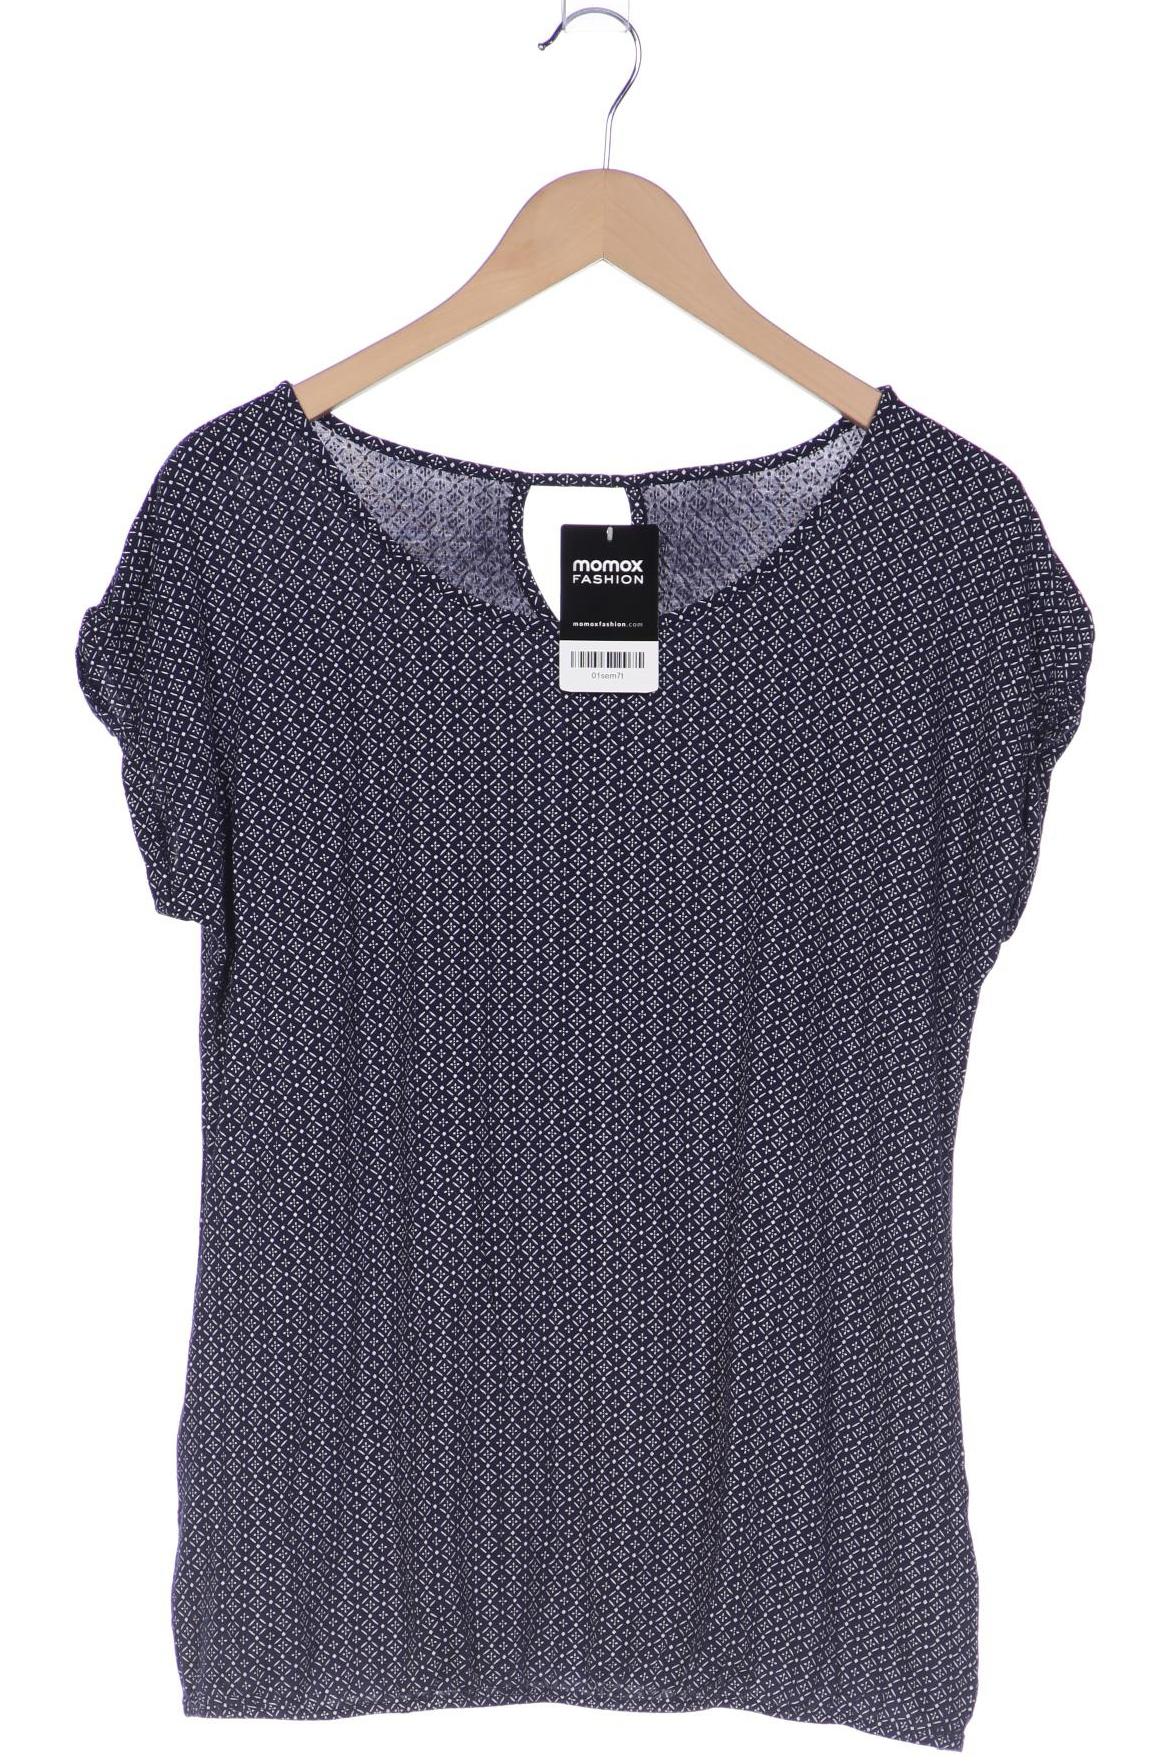 Lascana Damen T-Shirt, marineblau, Gr. 36 von Lascana